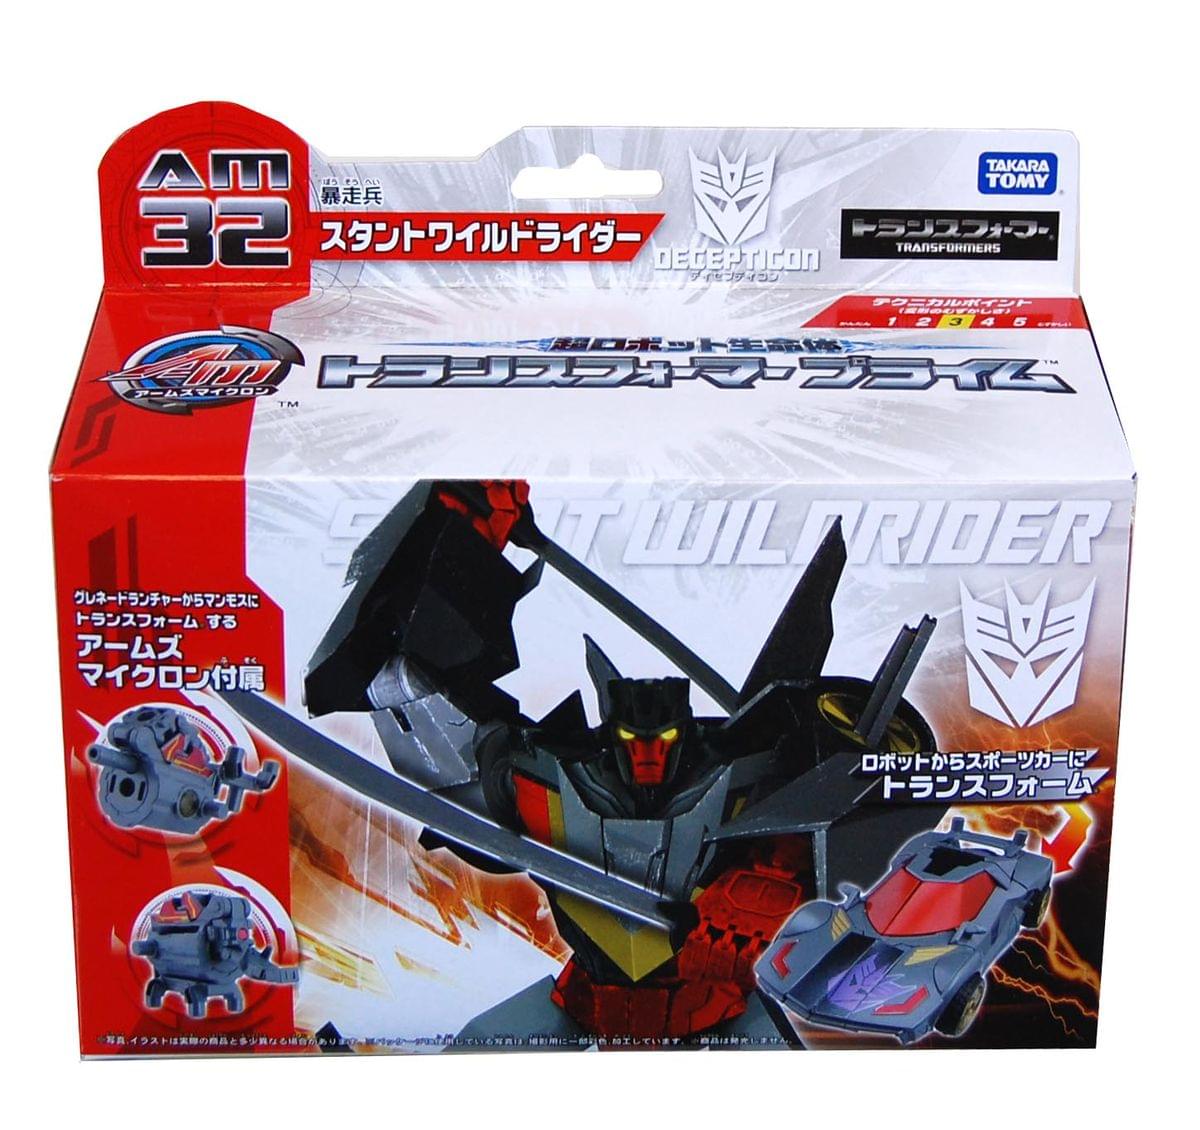 Transformers Decepticon AM-32 Wild Rider